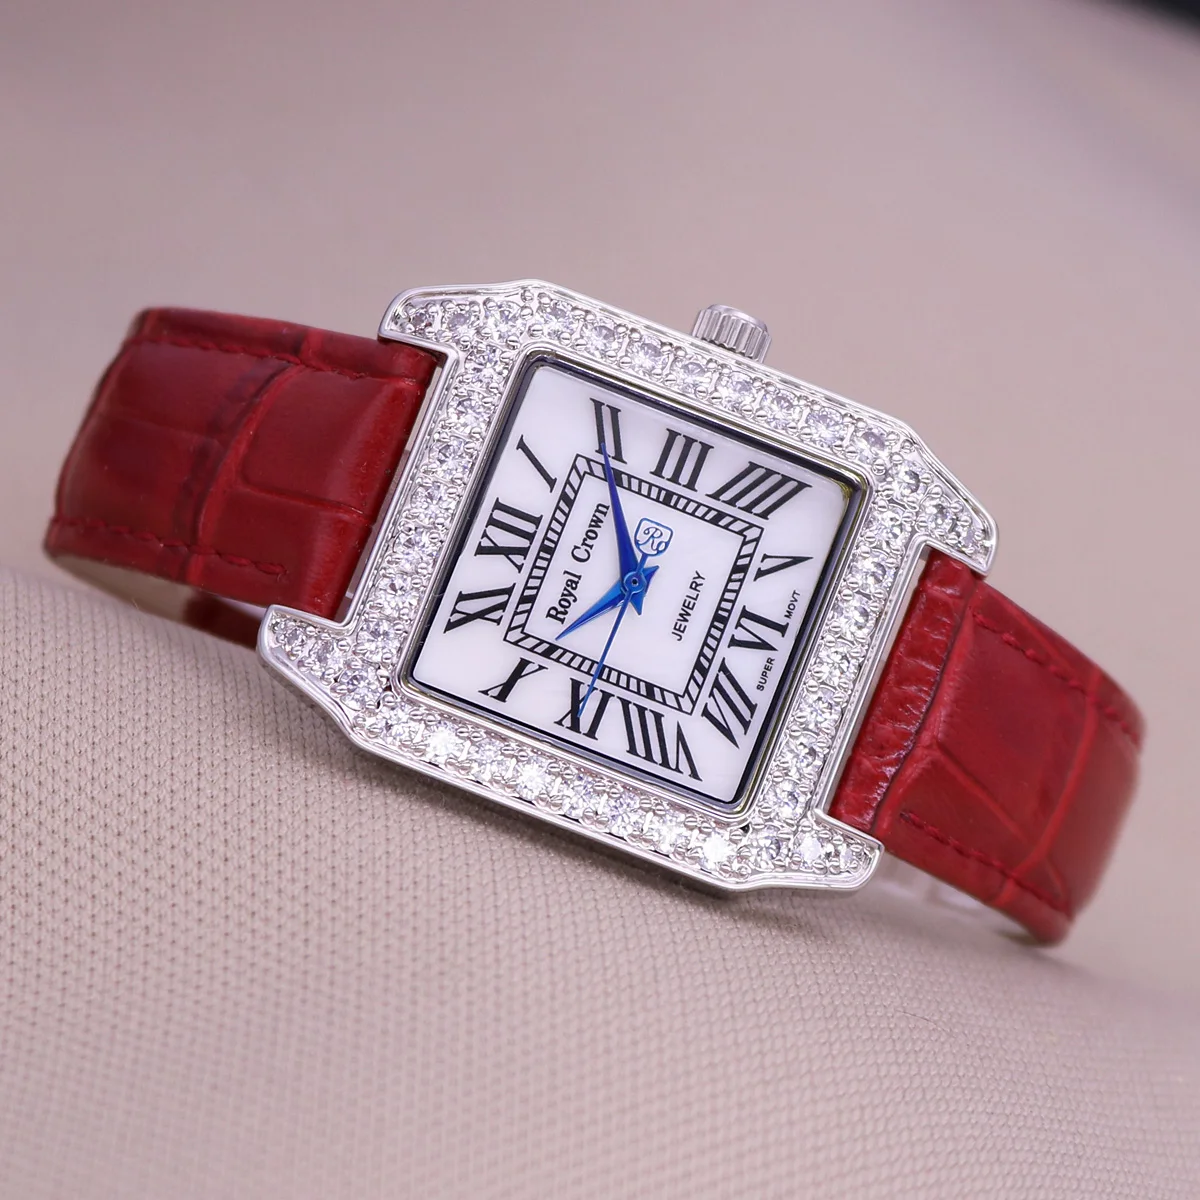 

Royal Crown Luxury Jewelry Lady Women's Watch Fashion Crystal Hours Dress Leather Bracelet Rhinestone Girl Birthday Gift Box